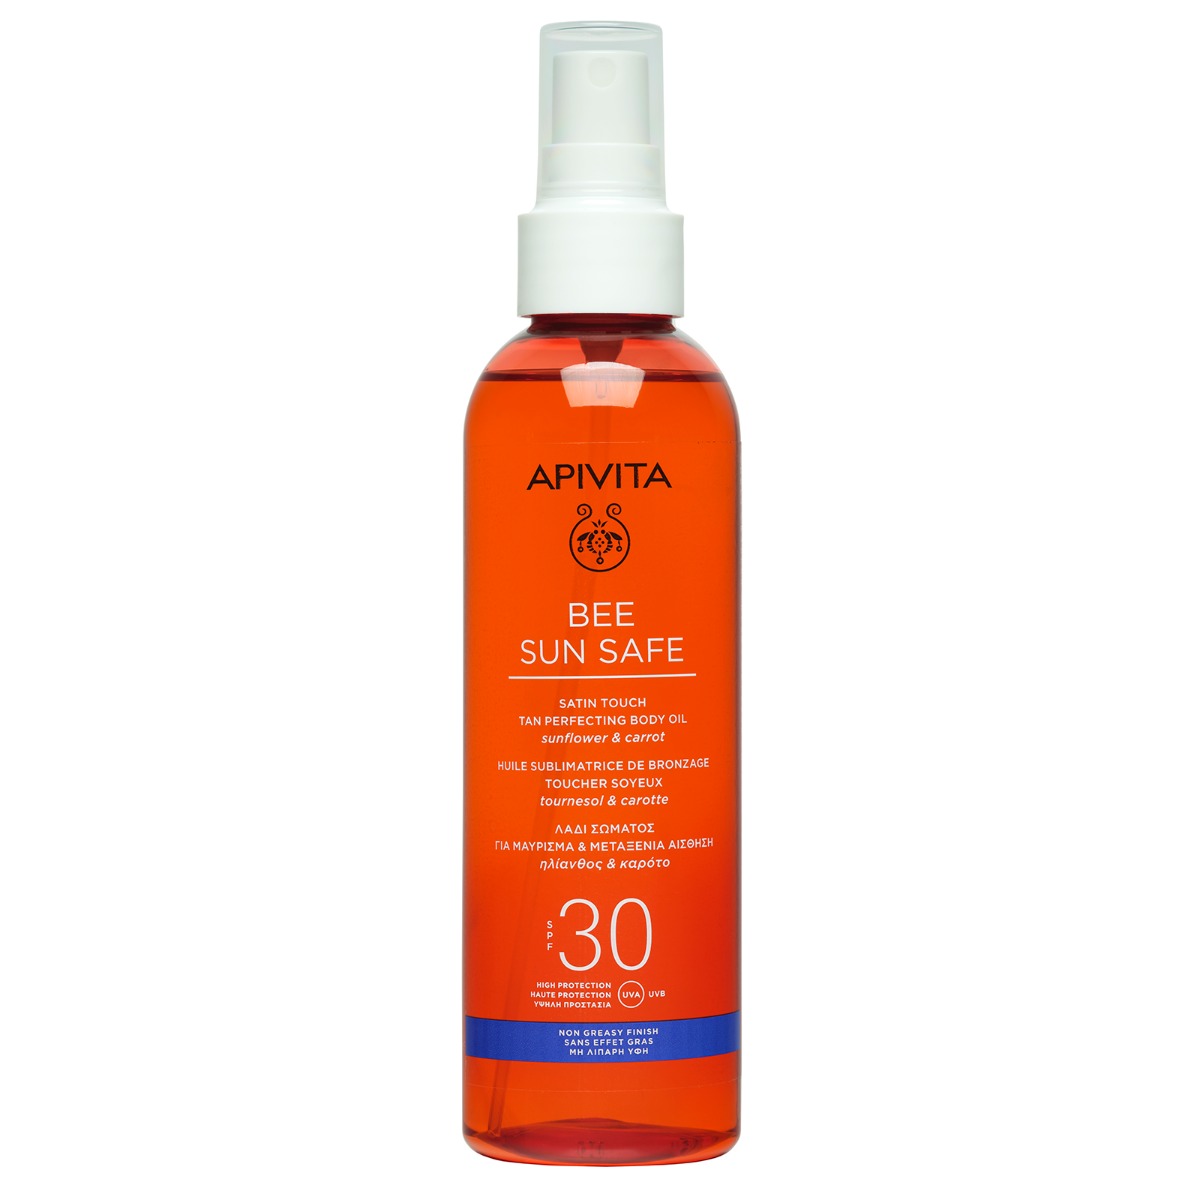 APIVITA Bee Sun Safe Satin Touch Tan Perfecting Body Oil SPF 30, 200ml